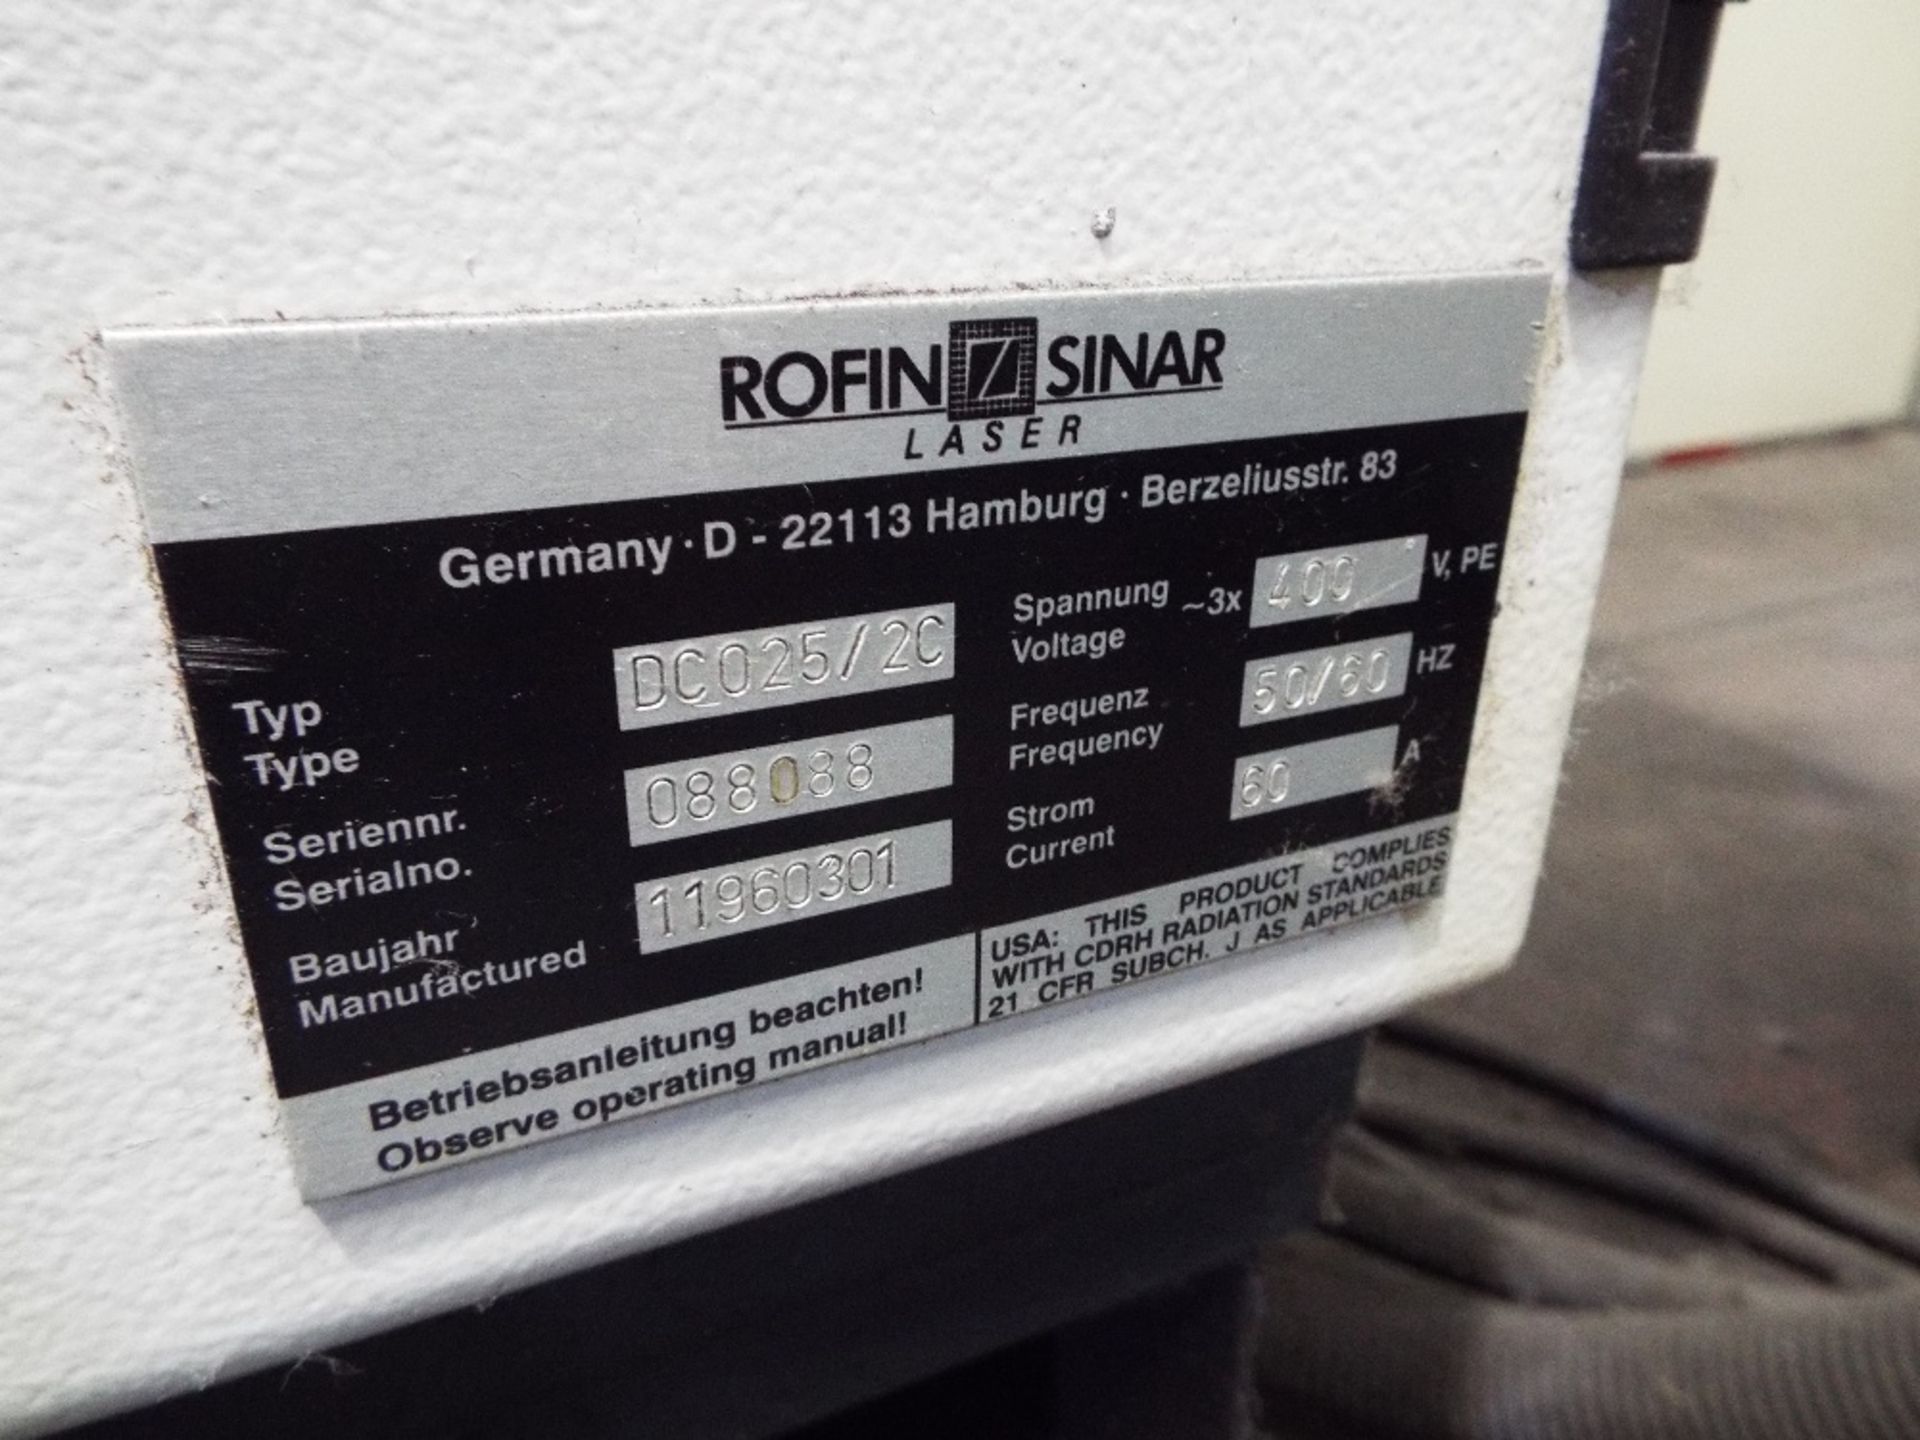 Rofin Sinar Laser Resonator Type DC025-2C & Resonator Control Panel - Image 4 of 6